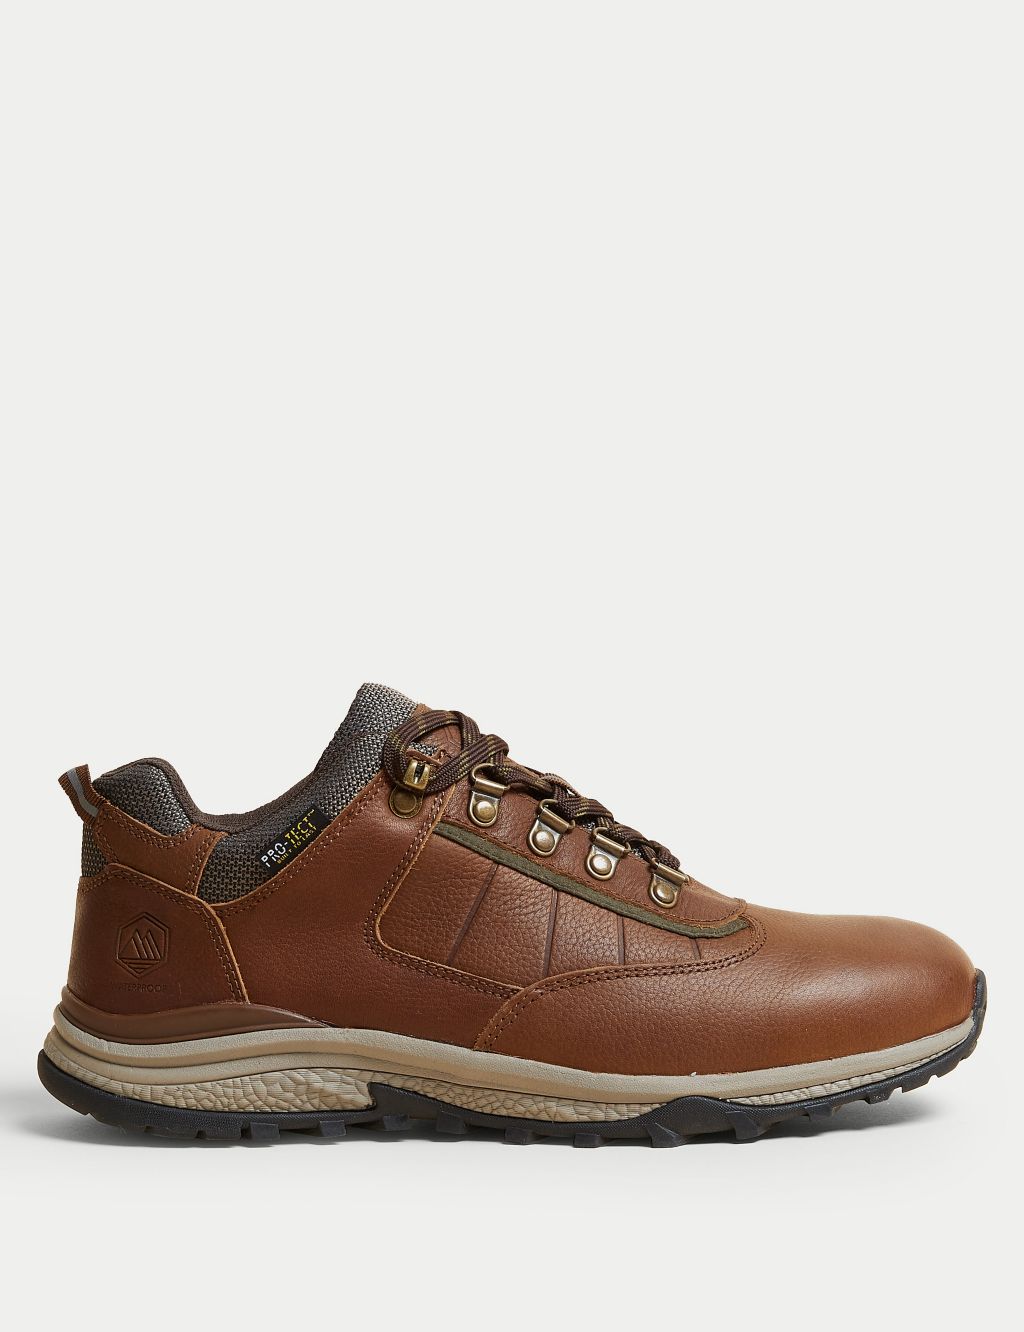 Leather Waterproof Walking Shoes image 1